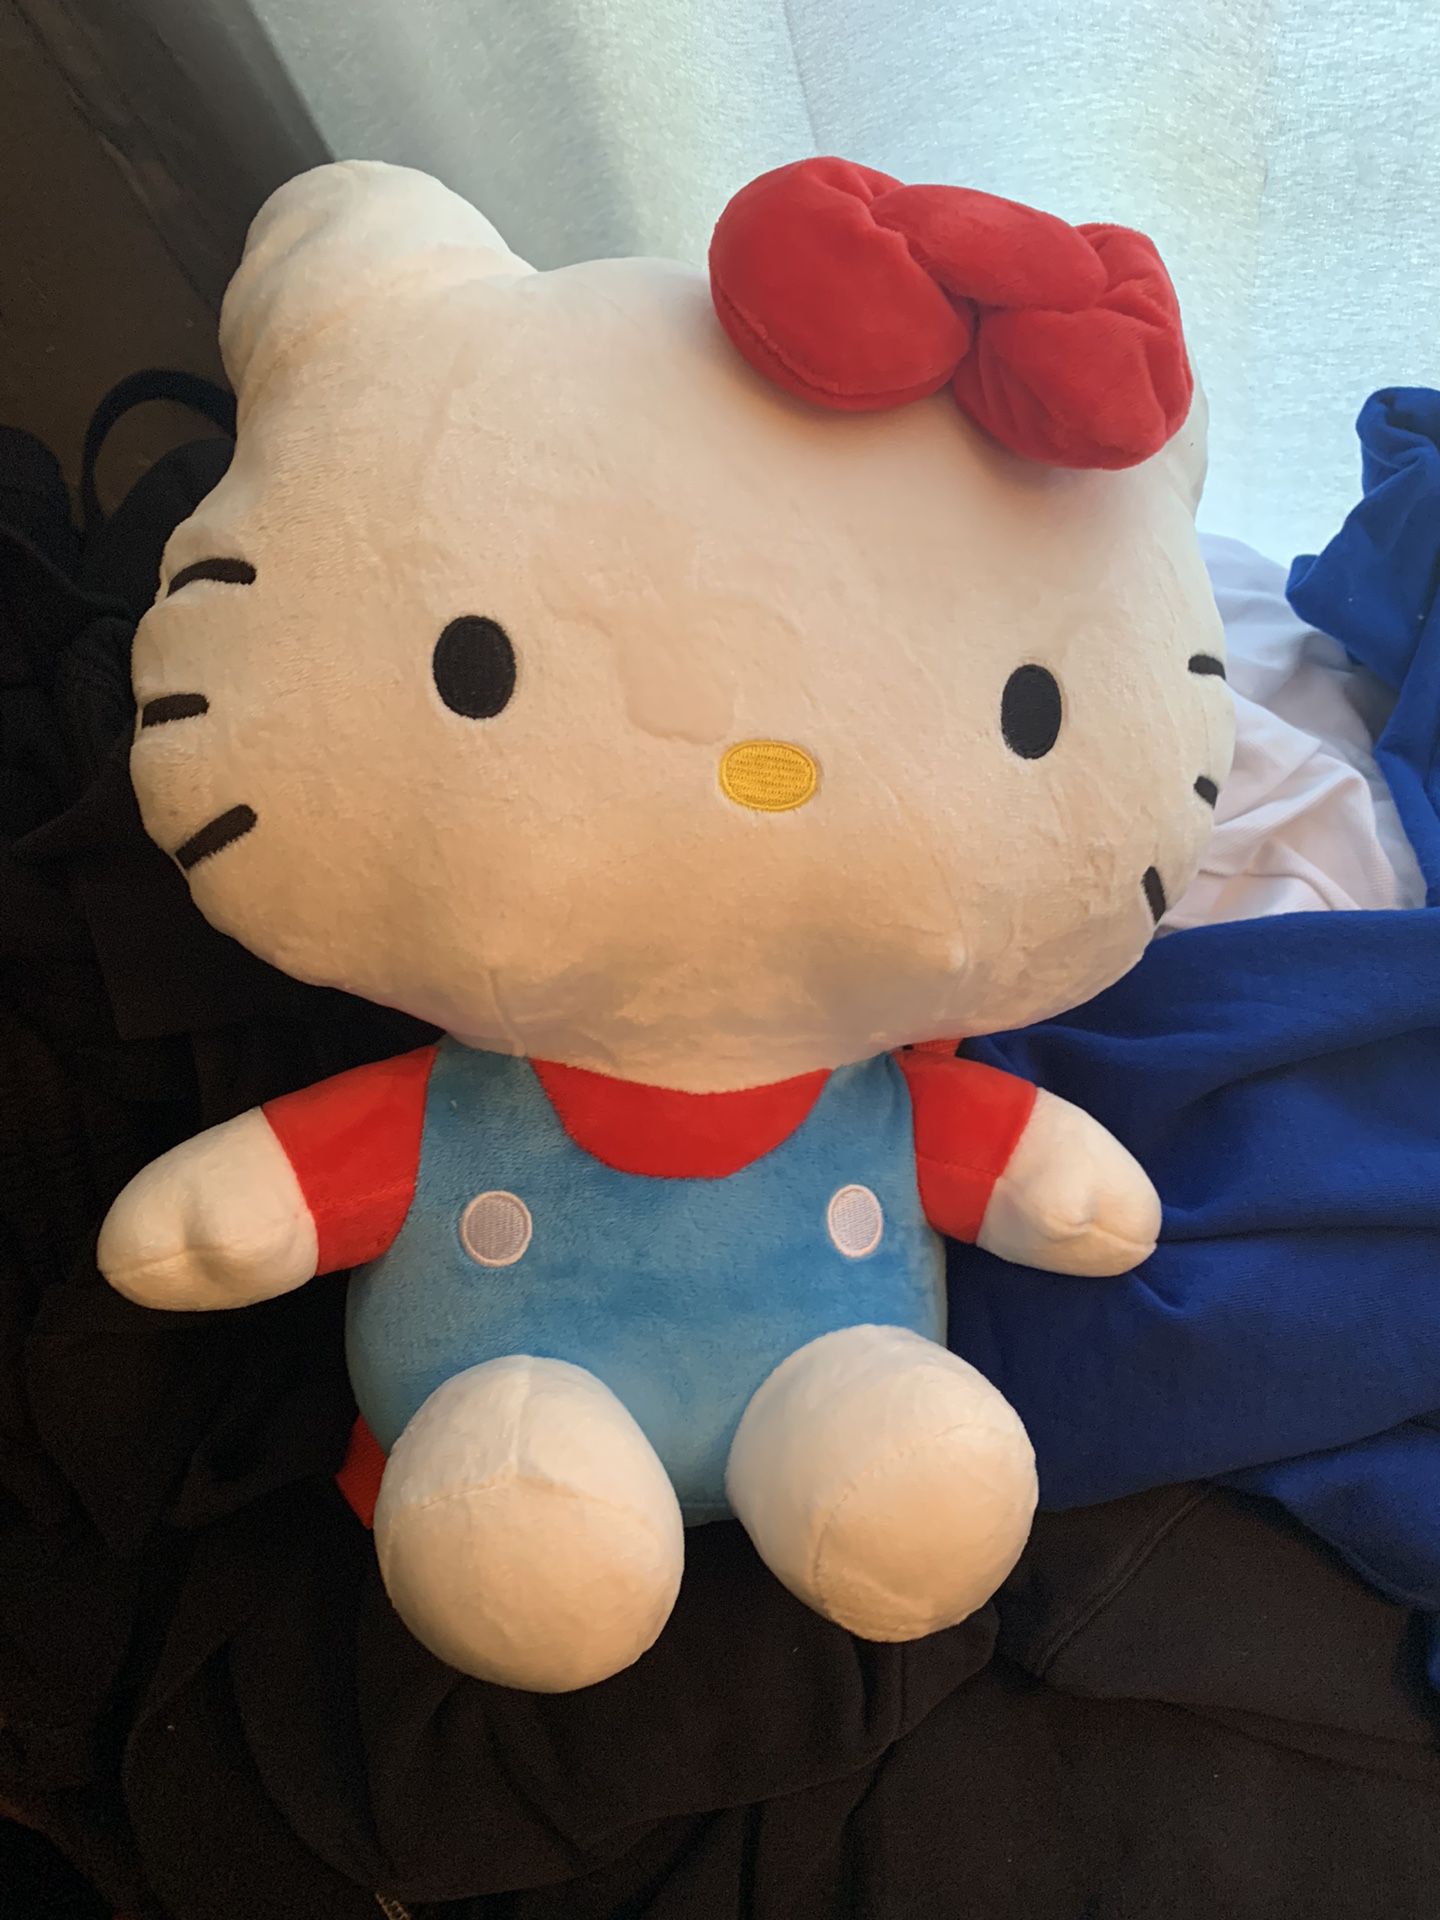 Hello Kitty, Backpack